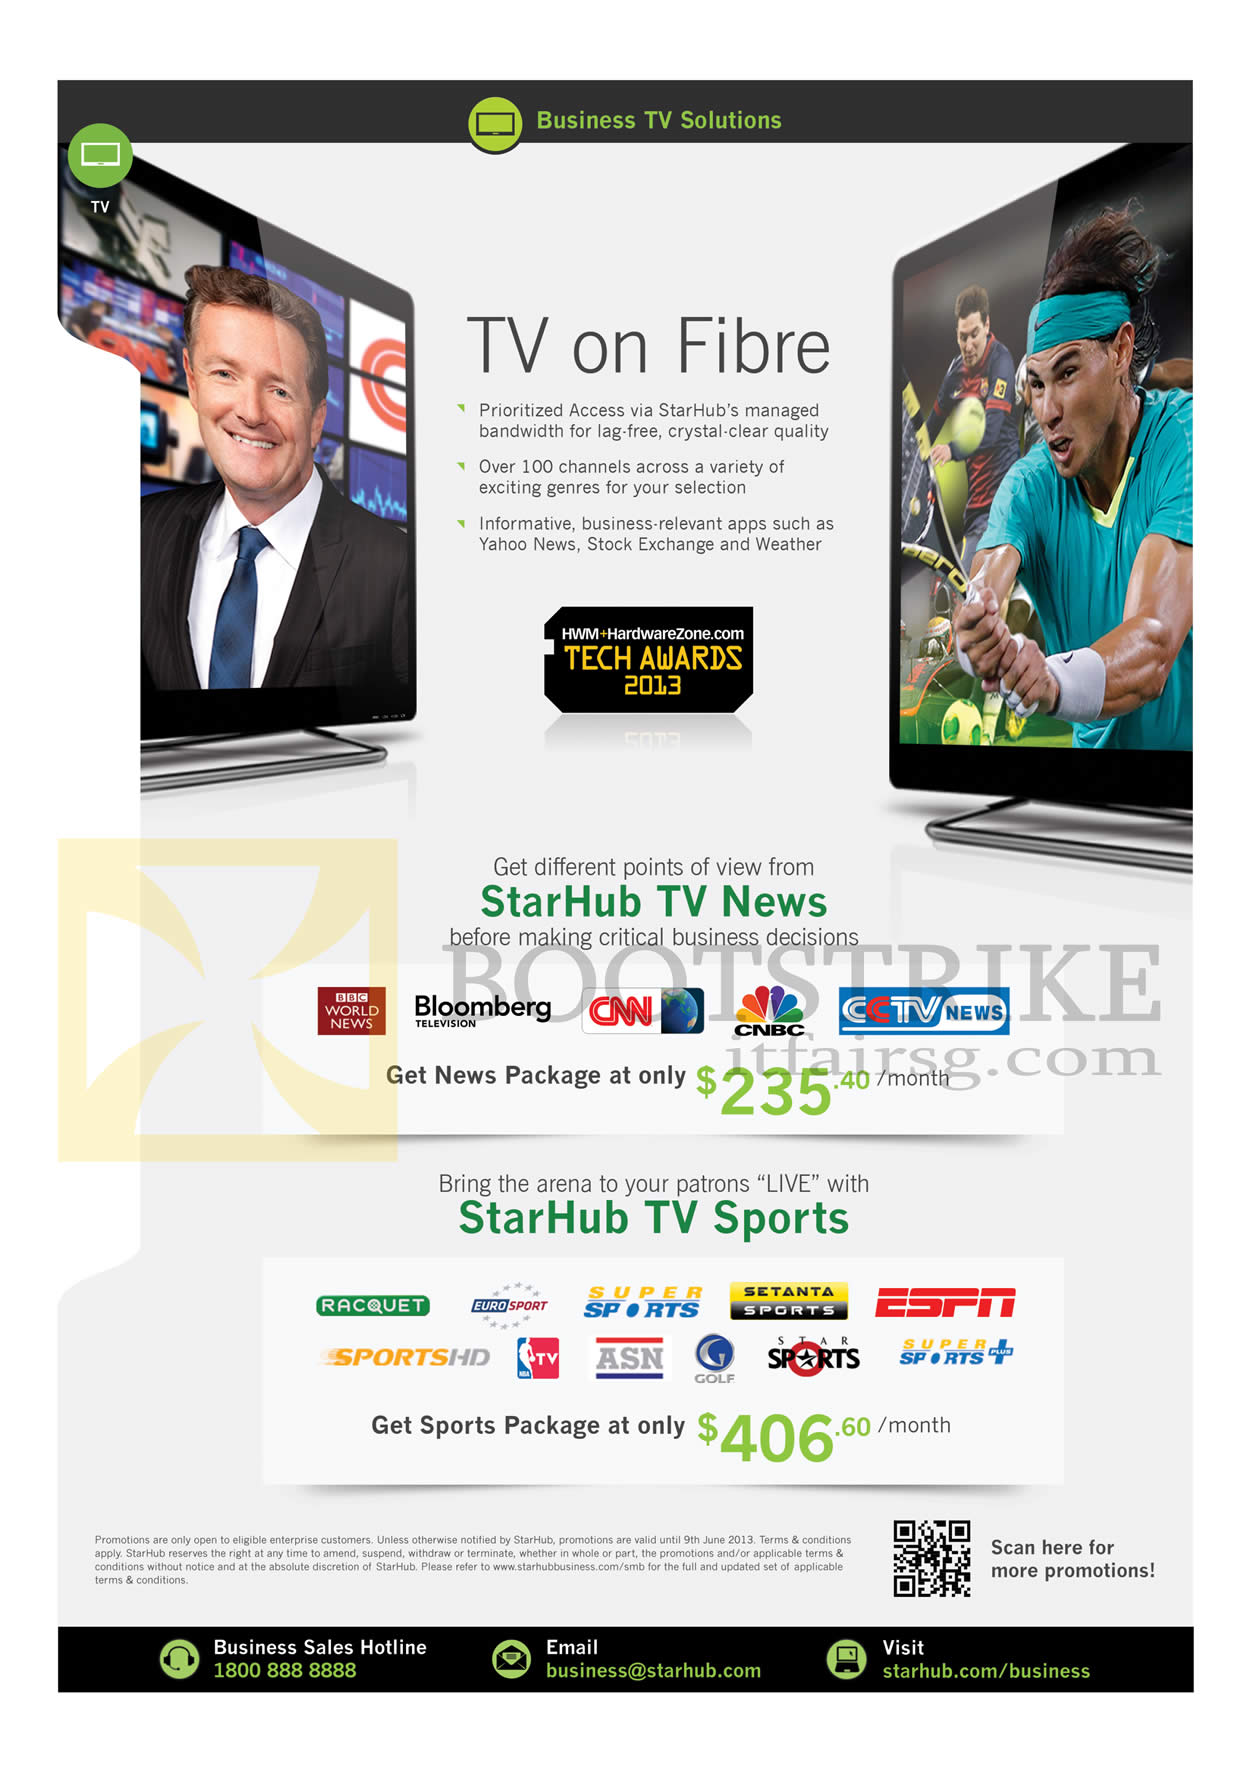 PC SHOW 2013 price list image brochure of Starhub Business TV On Fibre, TV Sports, TV News